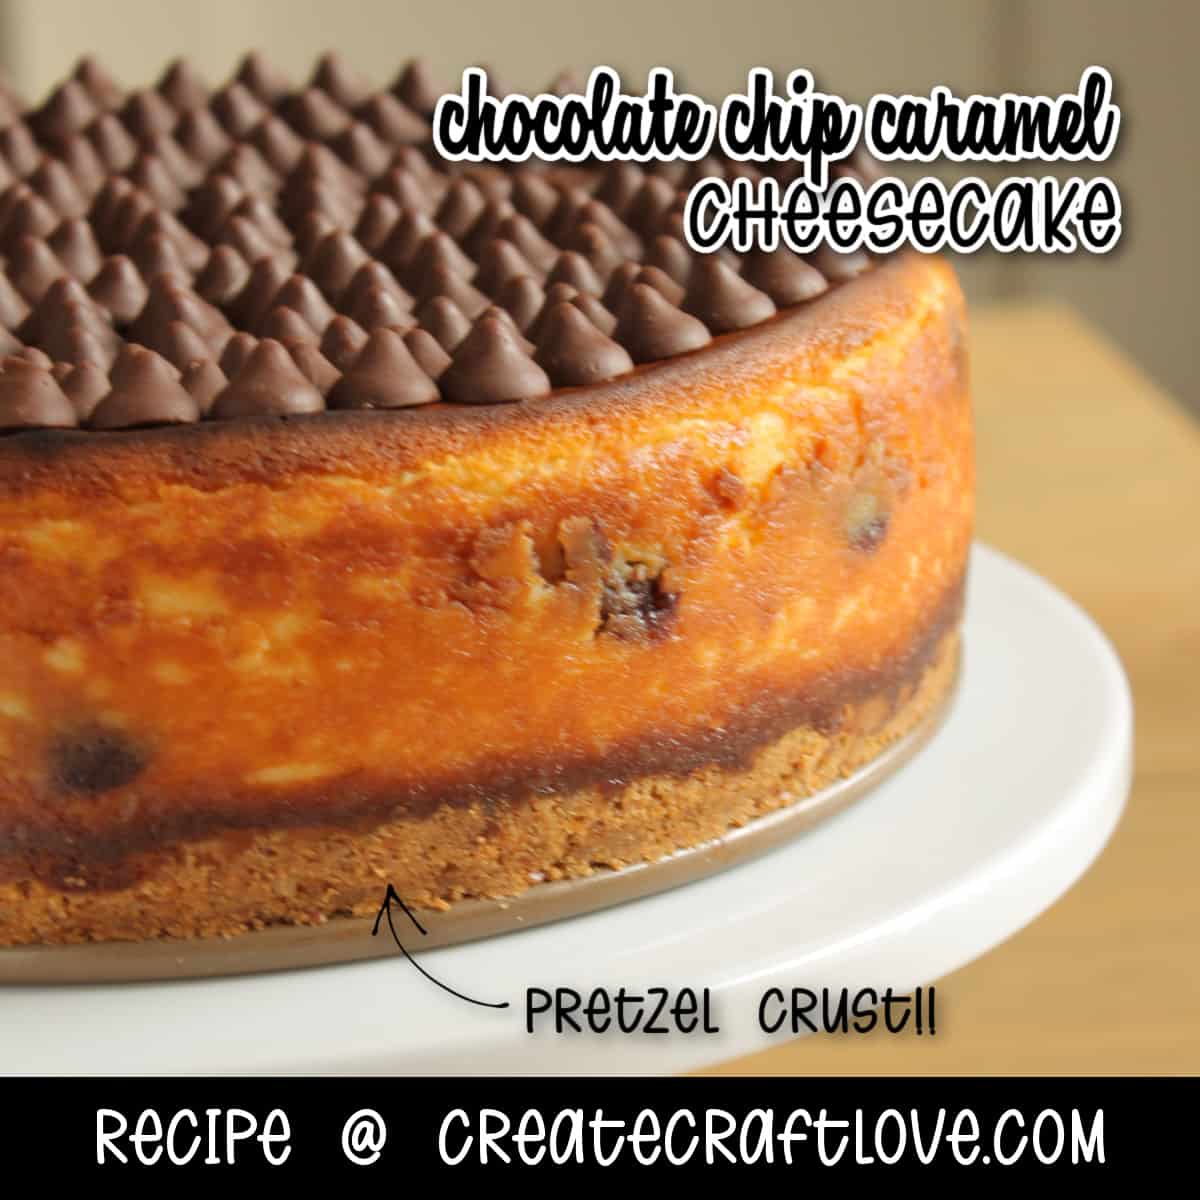 chocolate chip caramel cheesecake with pretzel crust